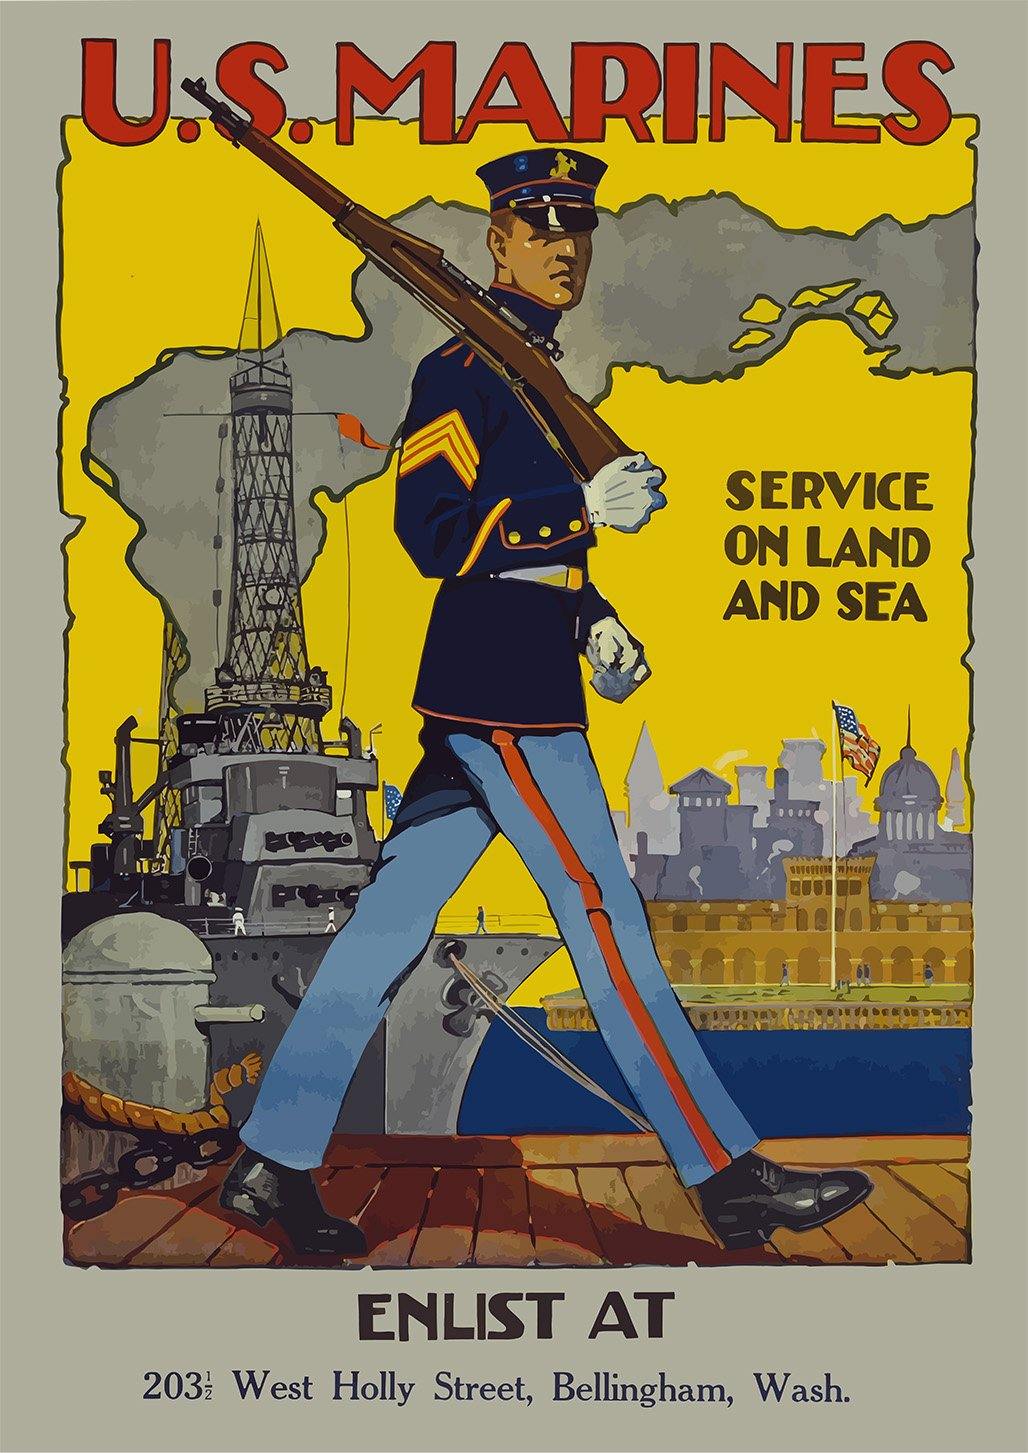 U.S. MARINES POSTER: Vintage Soldier Recruitment Enlist Art Print - Pimlico Prints